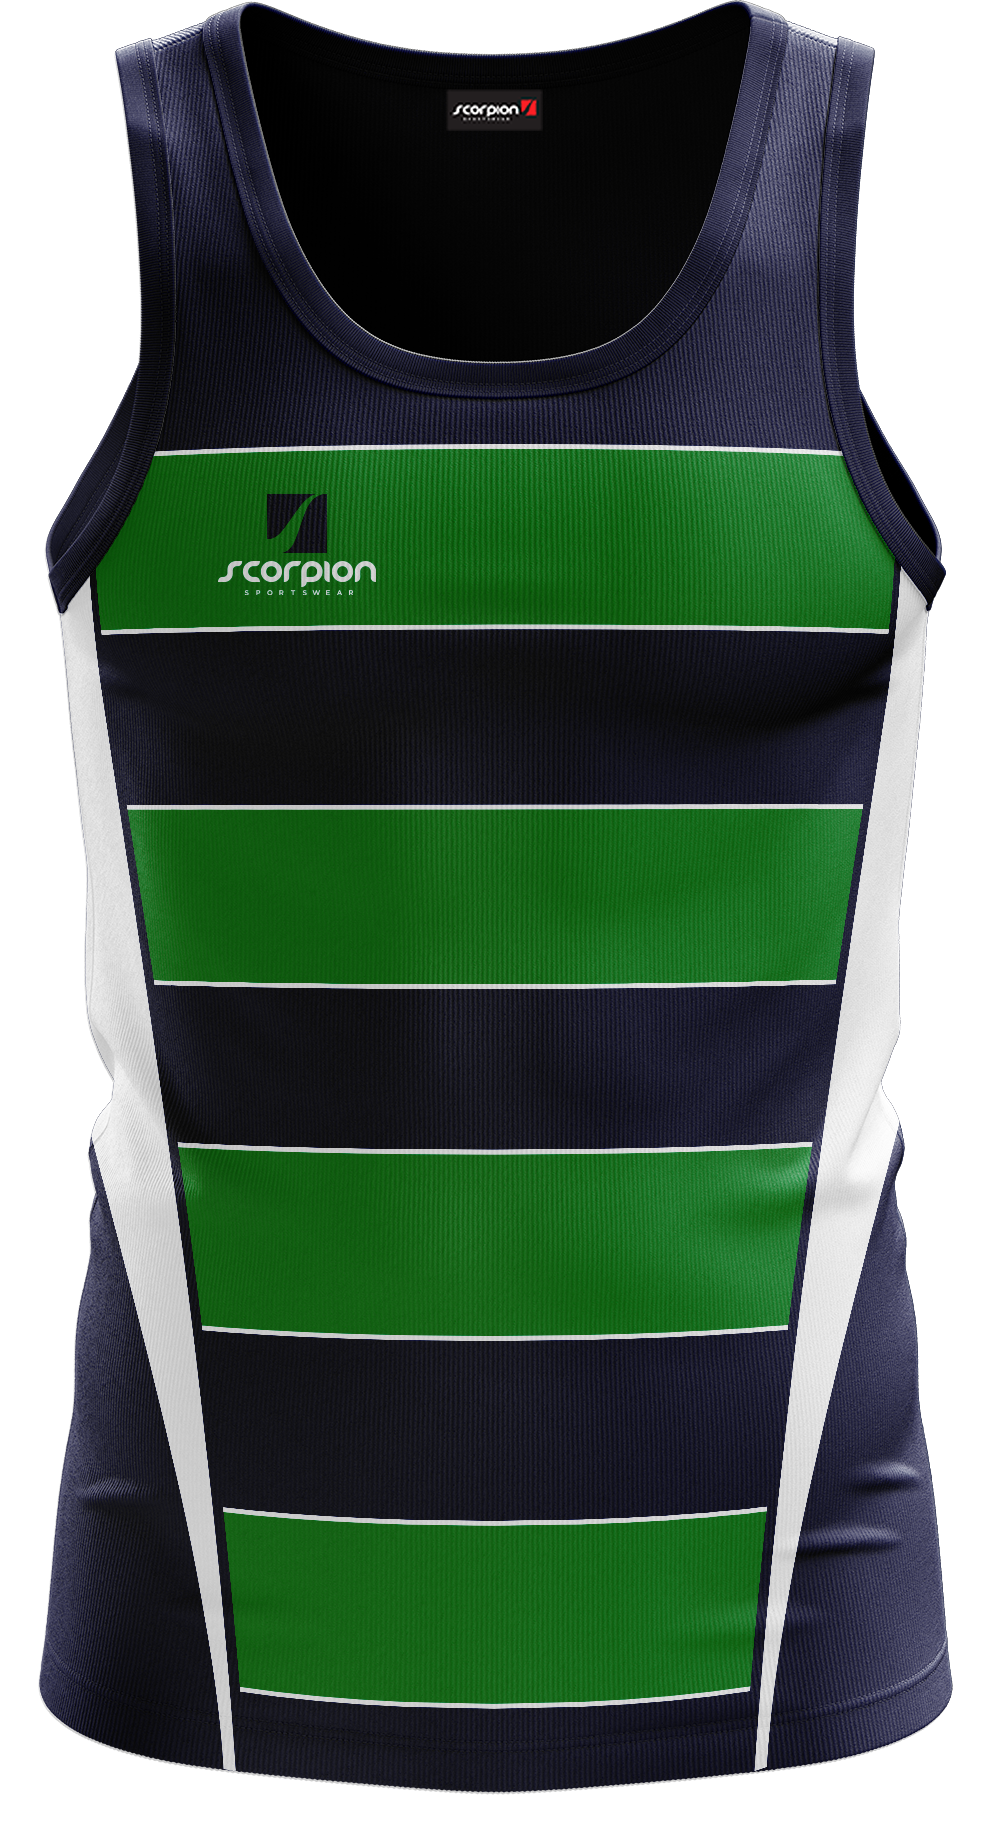 Scorpion Vests Pattern 6 - Navy/Green/White